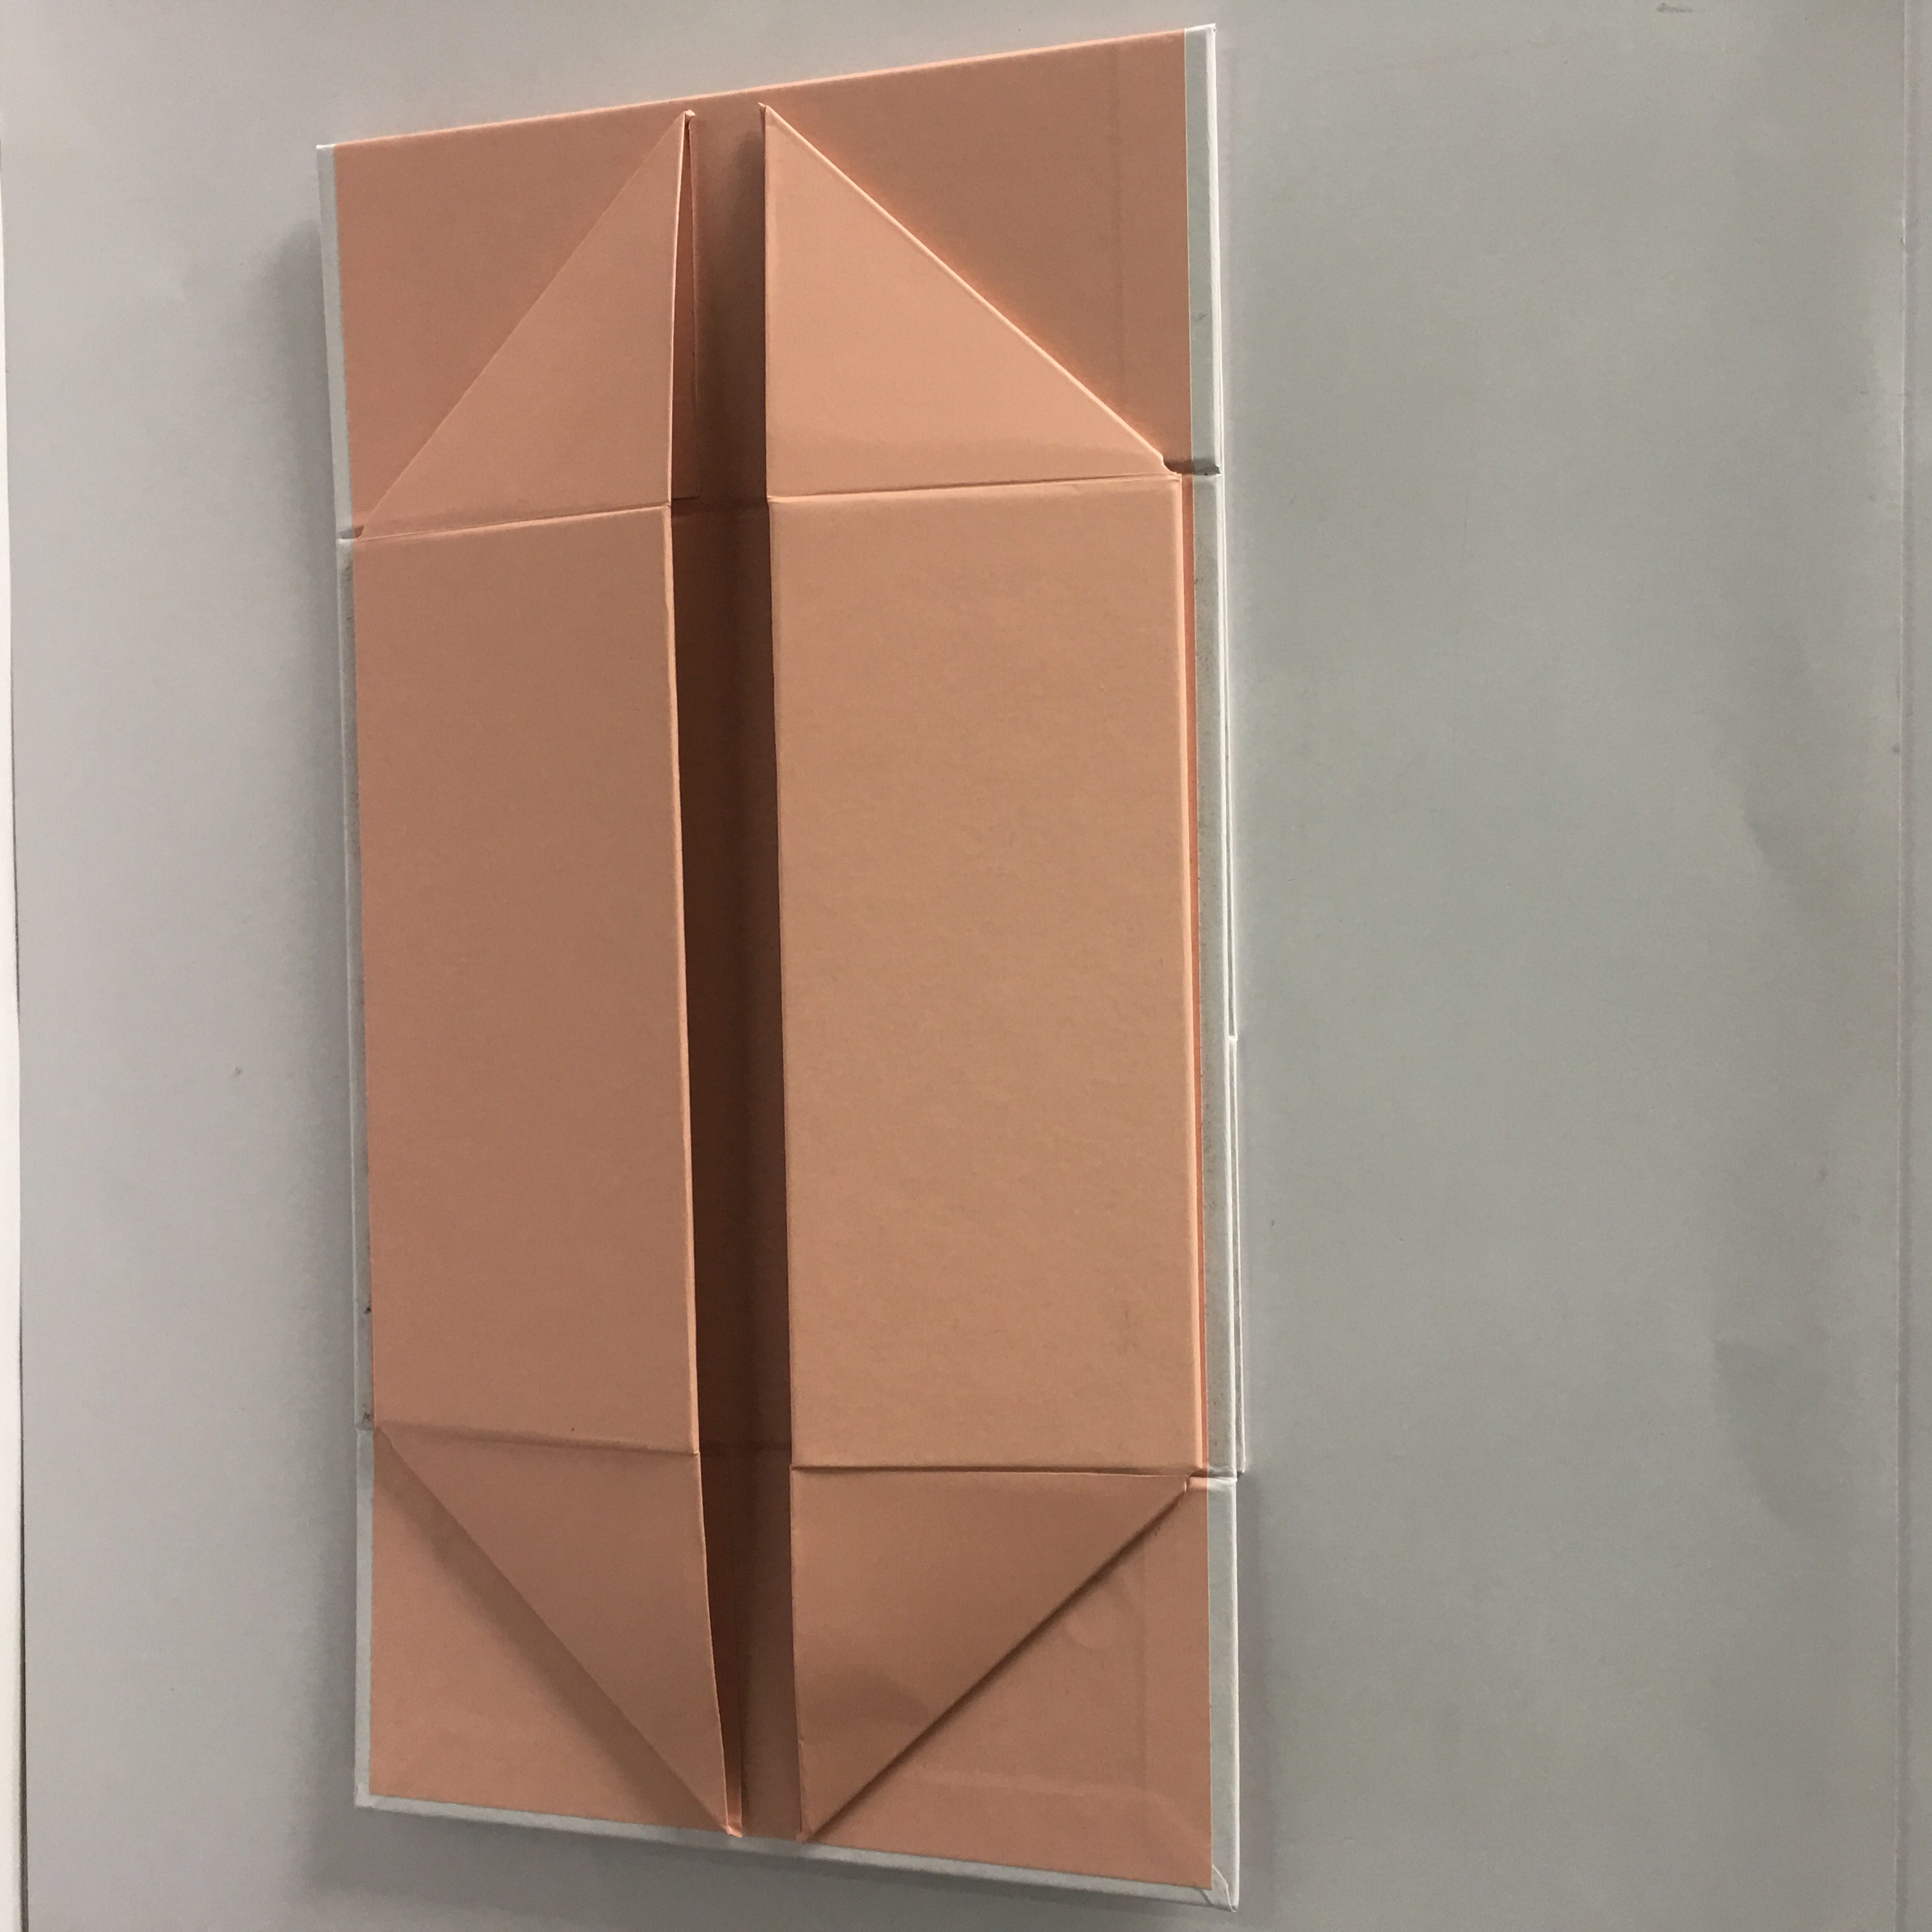 Origami Storage Rack Origami Collapsible Box Best Buy Lake Jackson Texas